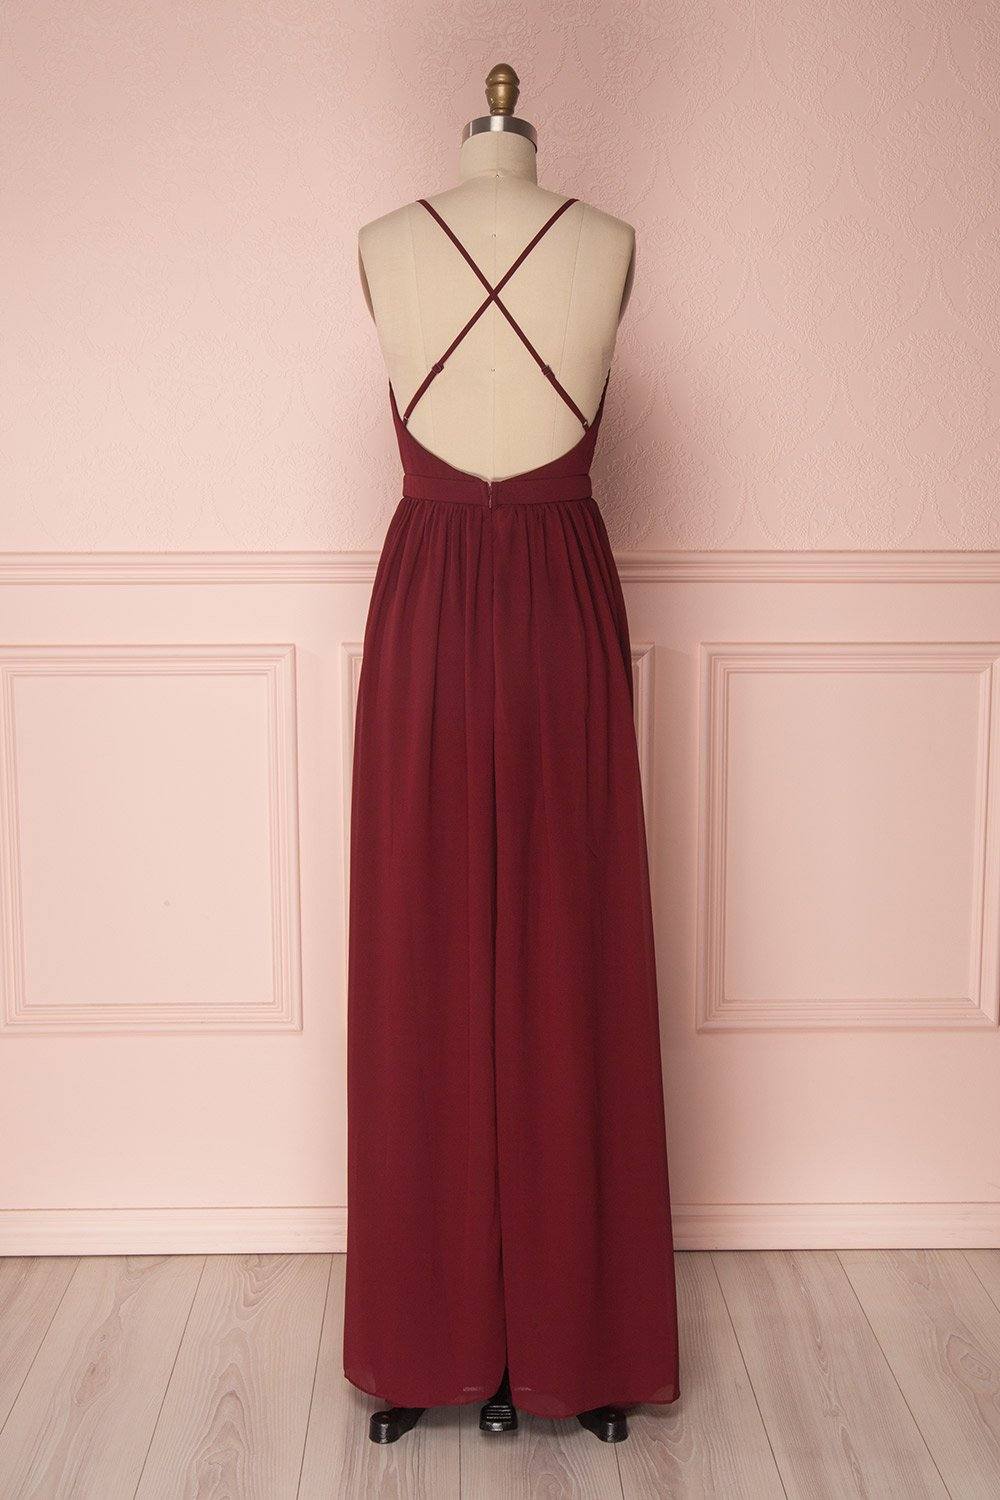 Simple burgundy chiffon long prom dress burgundy formal dress - RongMoon